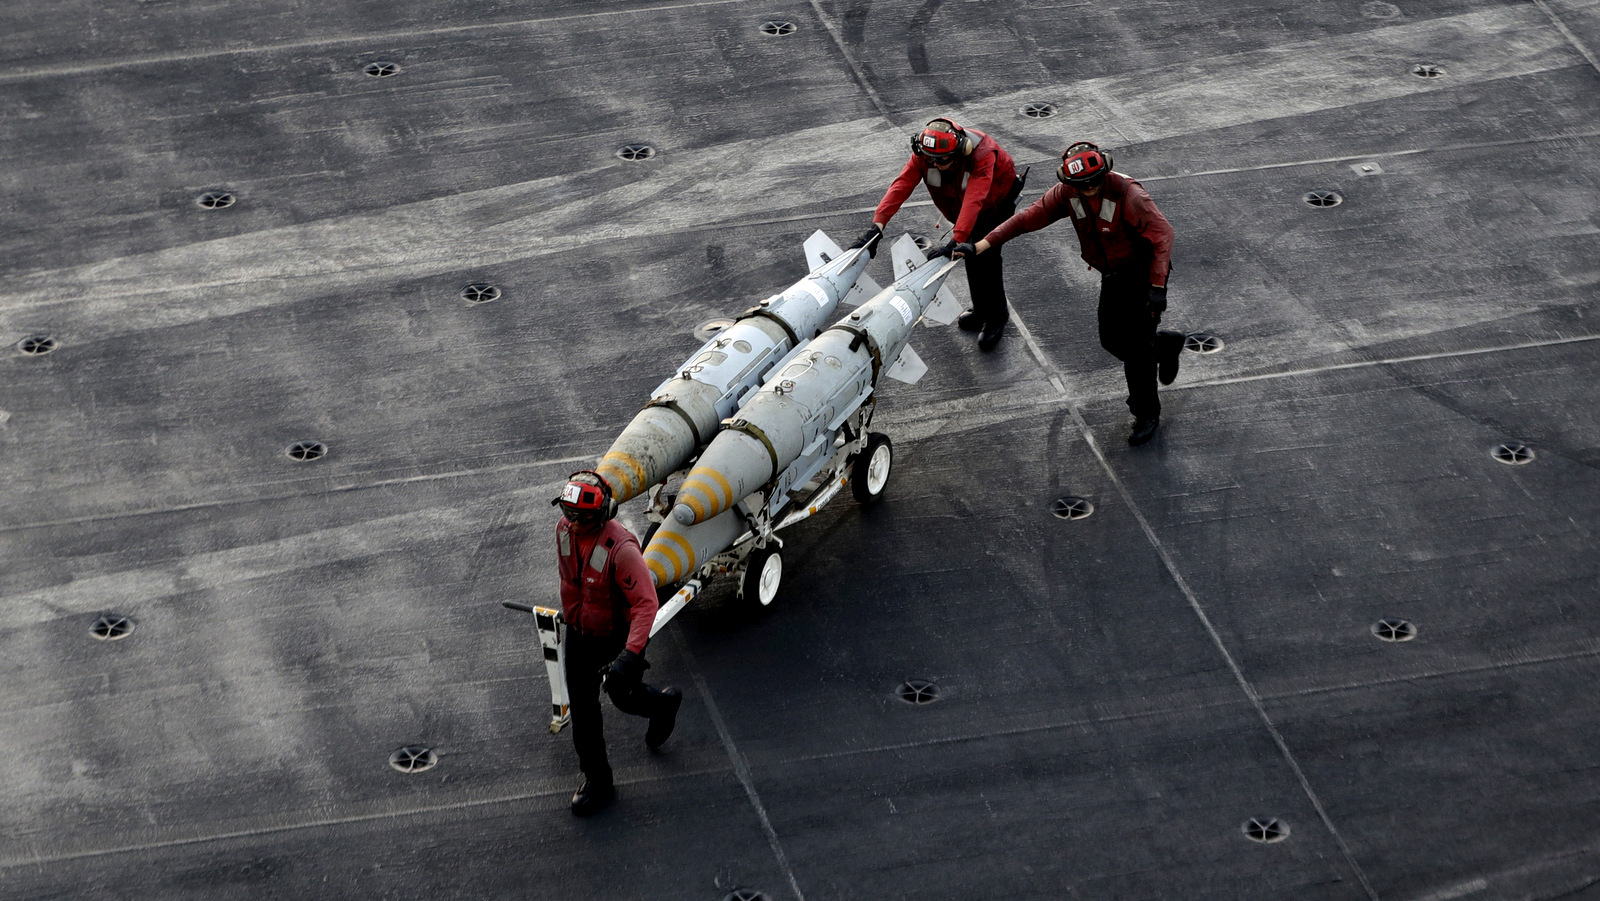 U.S. Navy sailors push bombs across the deck of the U.S.S. Dwight D. Eisenhower aircraft carrier, deployed in the Persian Gulf near Iran. (AP/Petr David Josek)